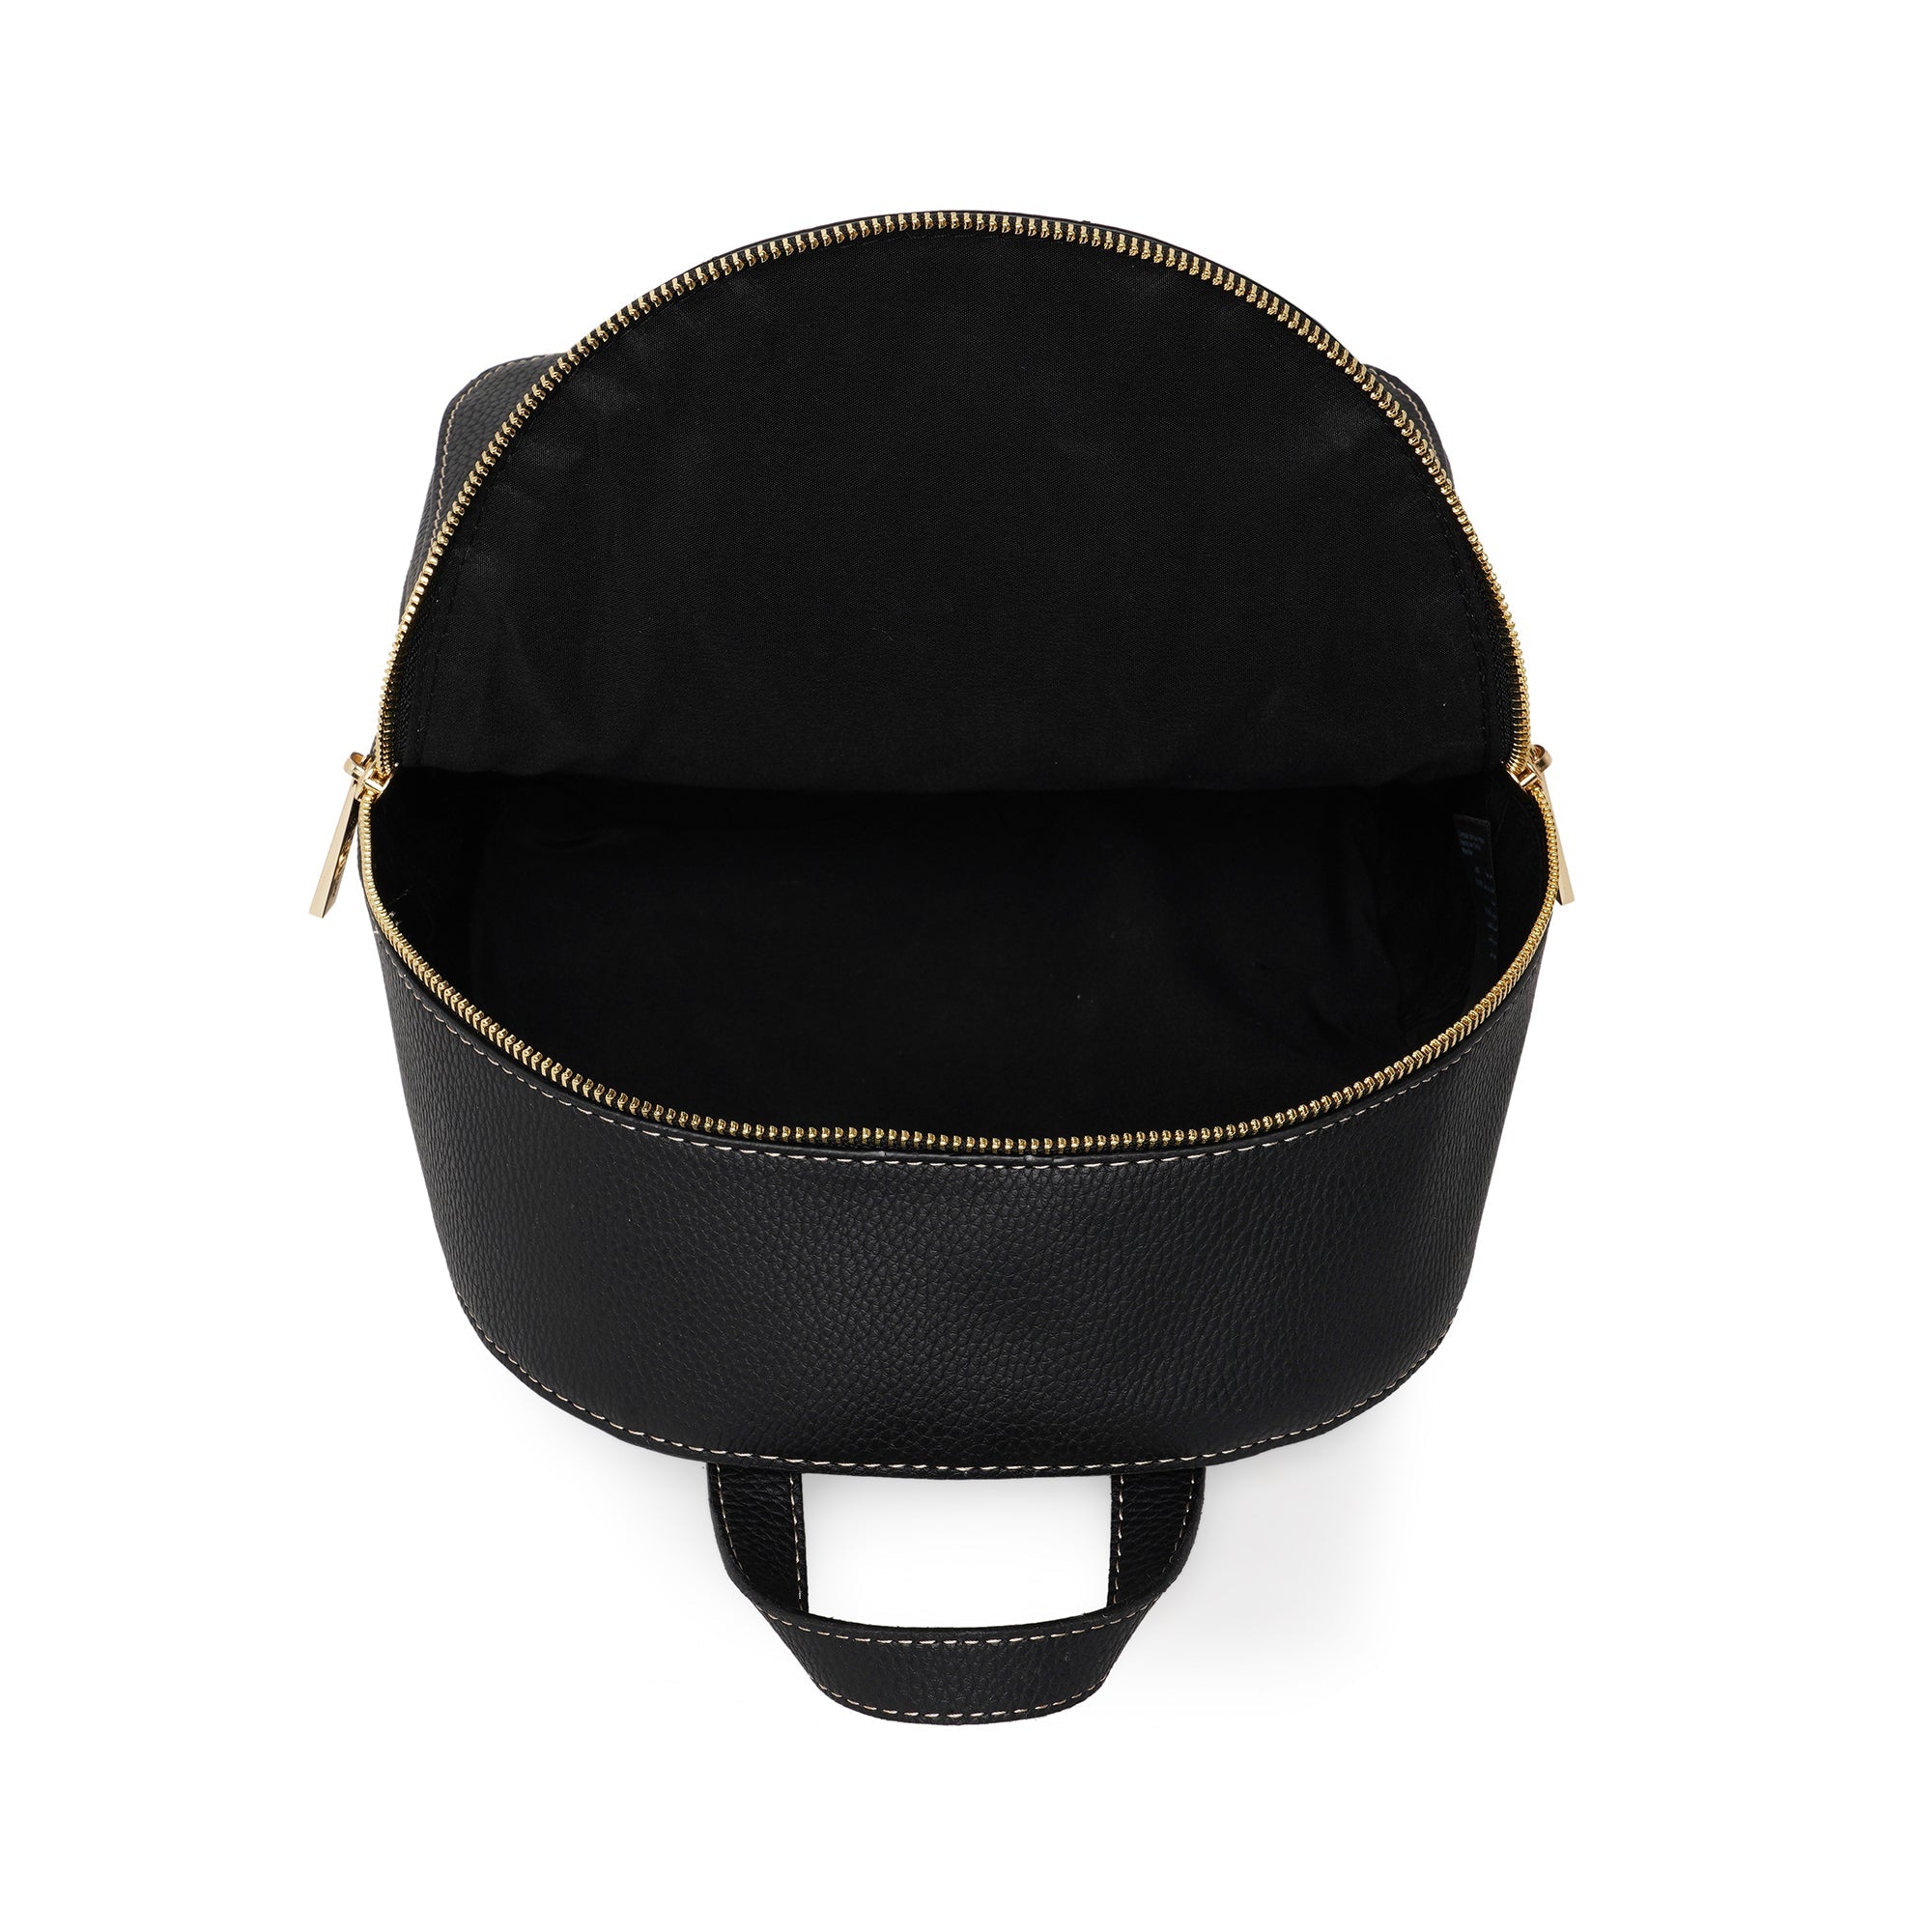 Accessorize London Women's Faux Leather Black Ricki Backpack